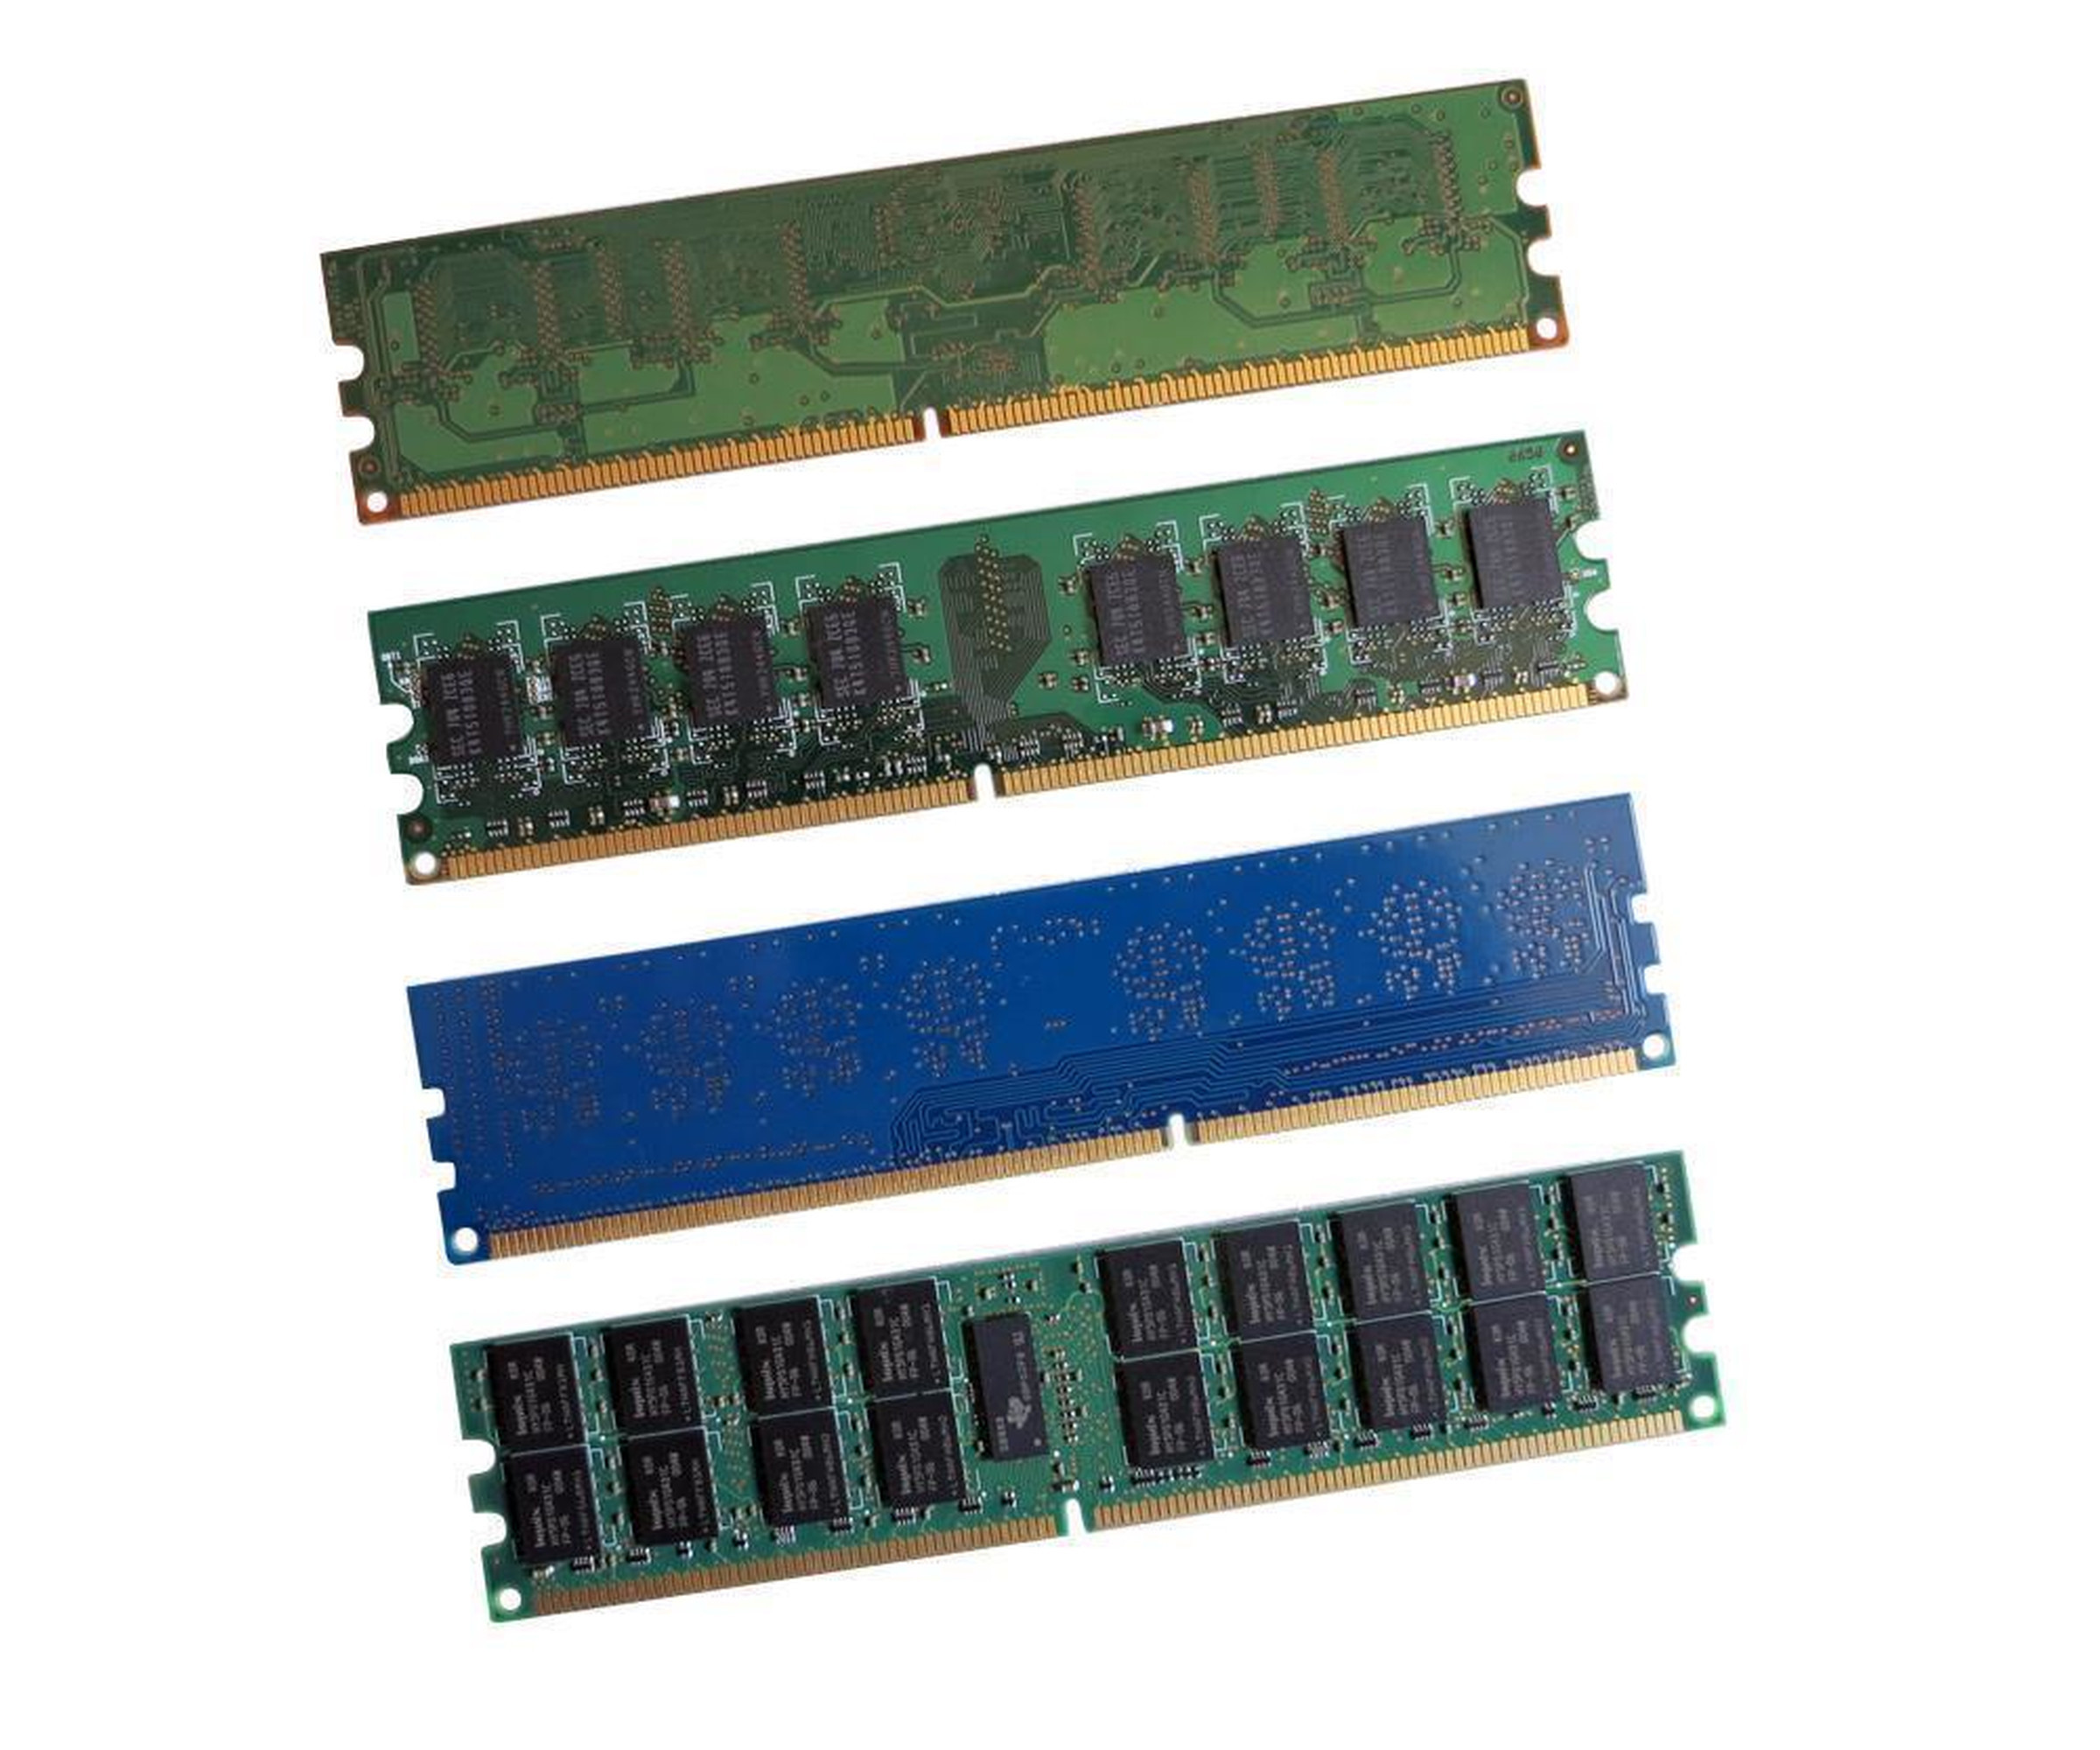 Samsung M378T6453FZ3-CD5 Memory - 512 MB - DIMM 240-PIN - PC-4200 - DDR2 SDRAM